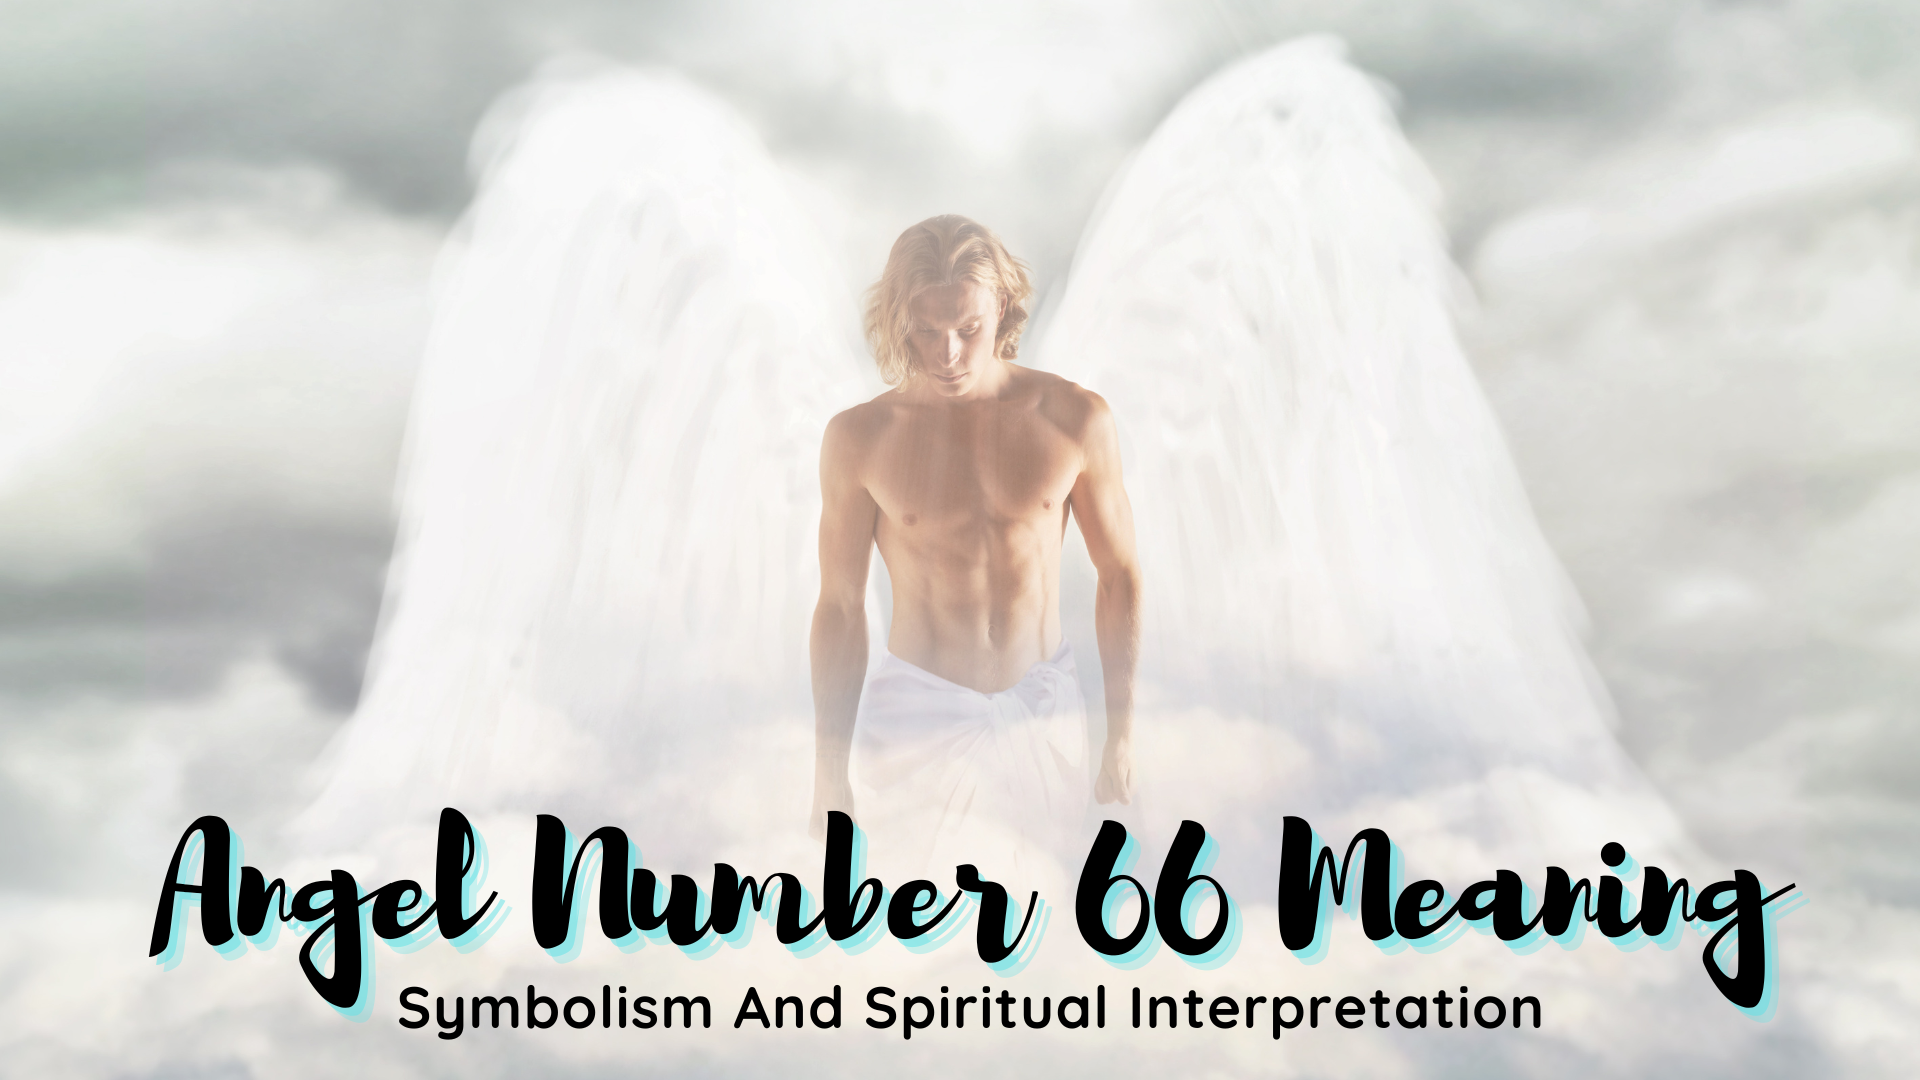 Angel Number 66 Meaning - Symbolism And Spiritual Interpretation